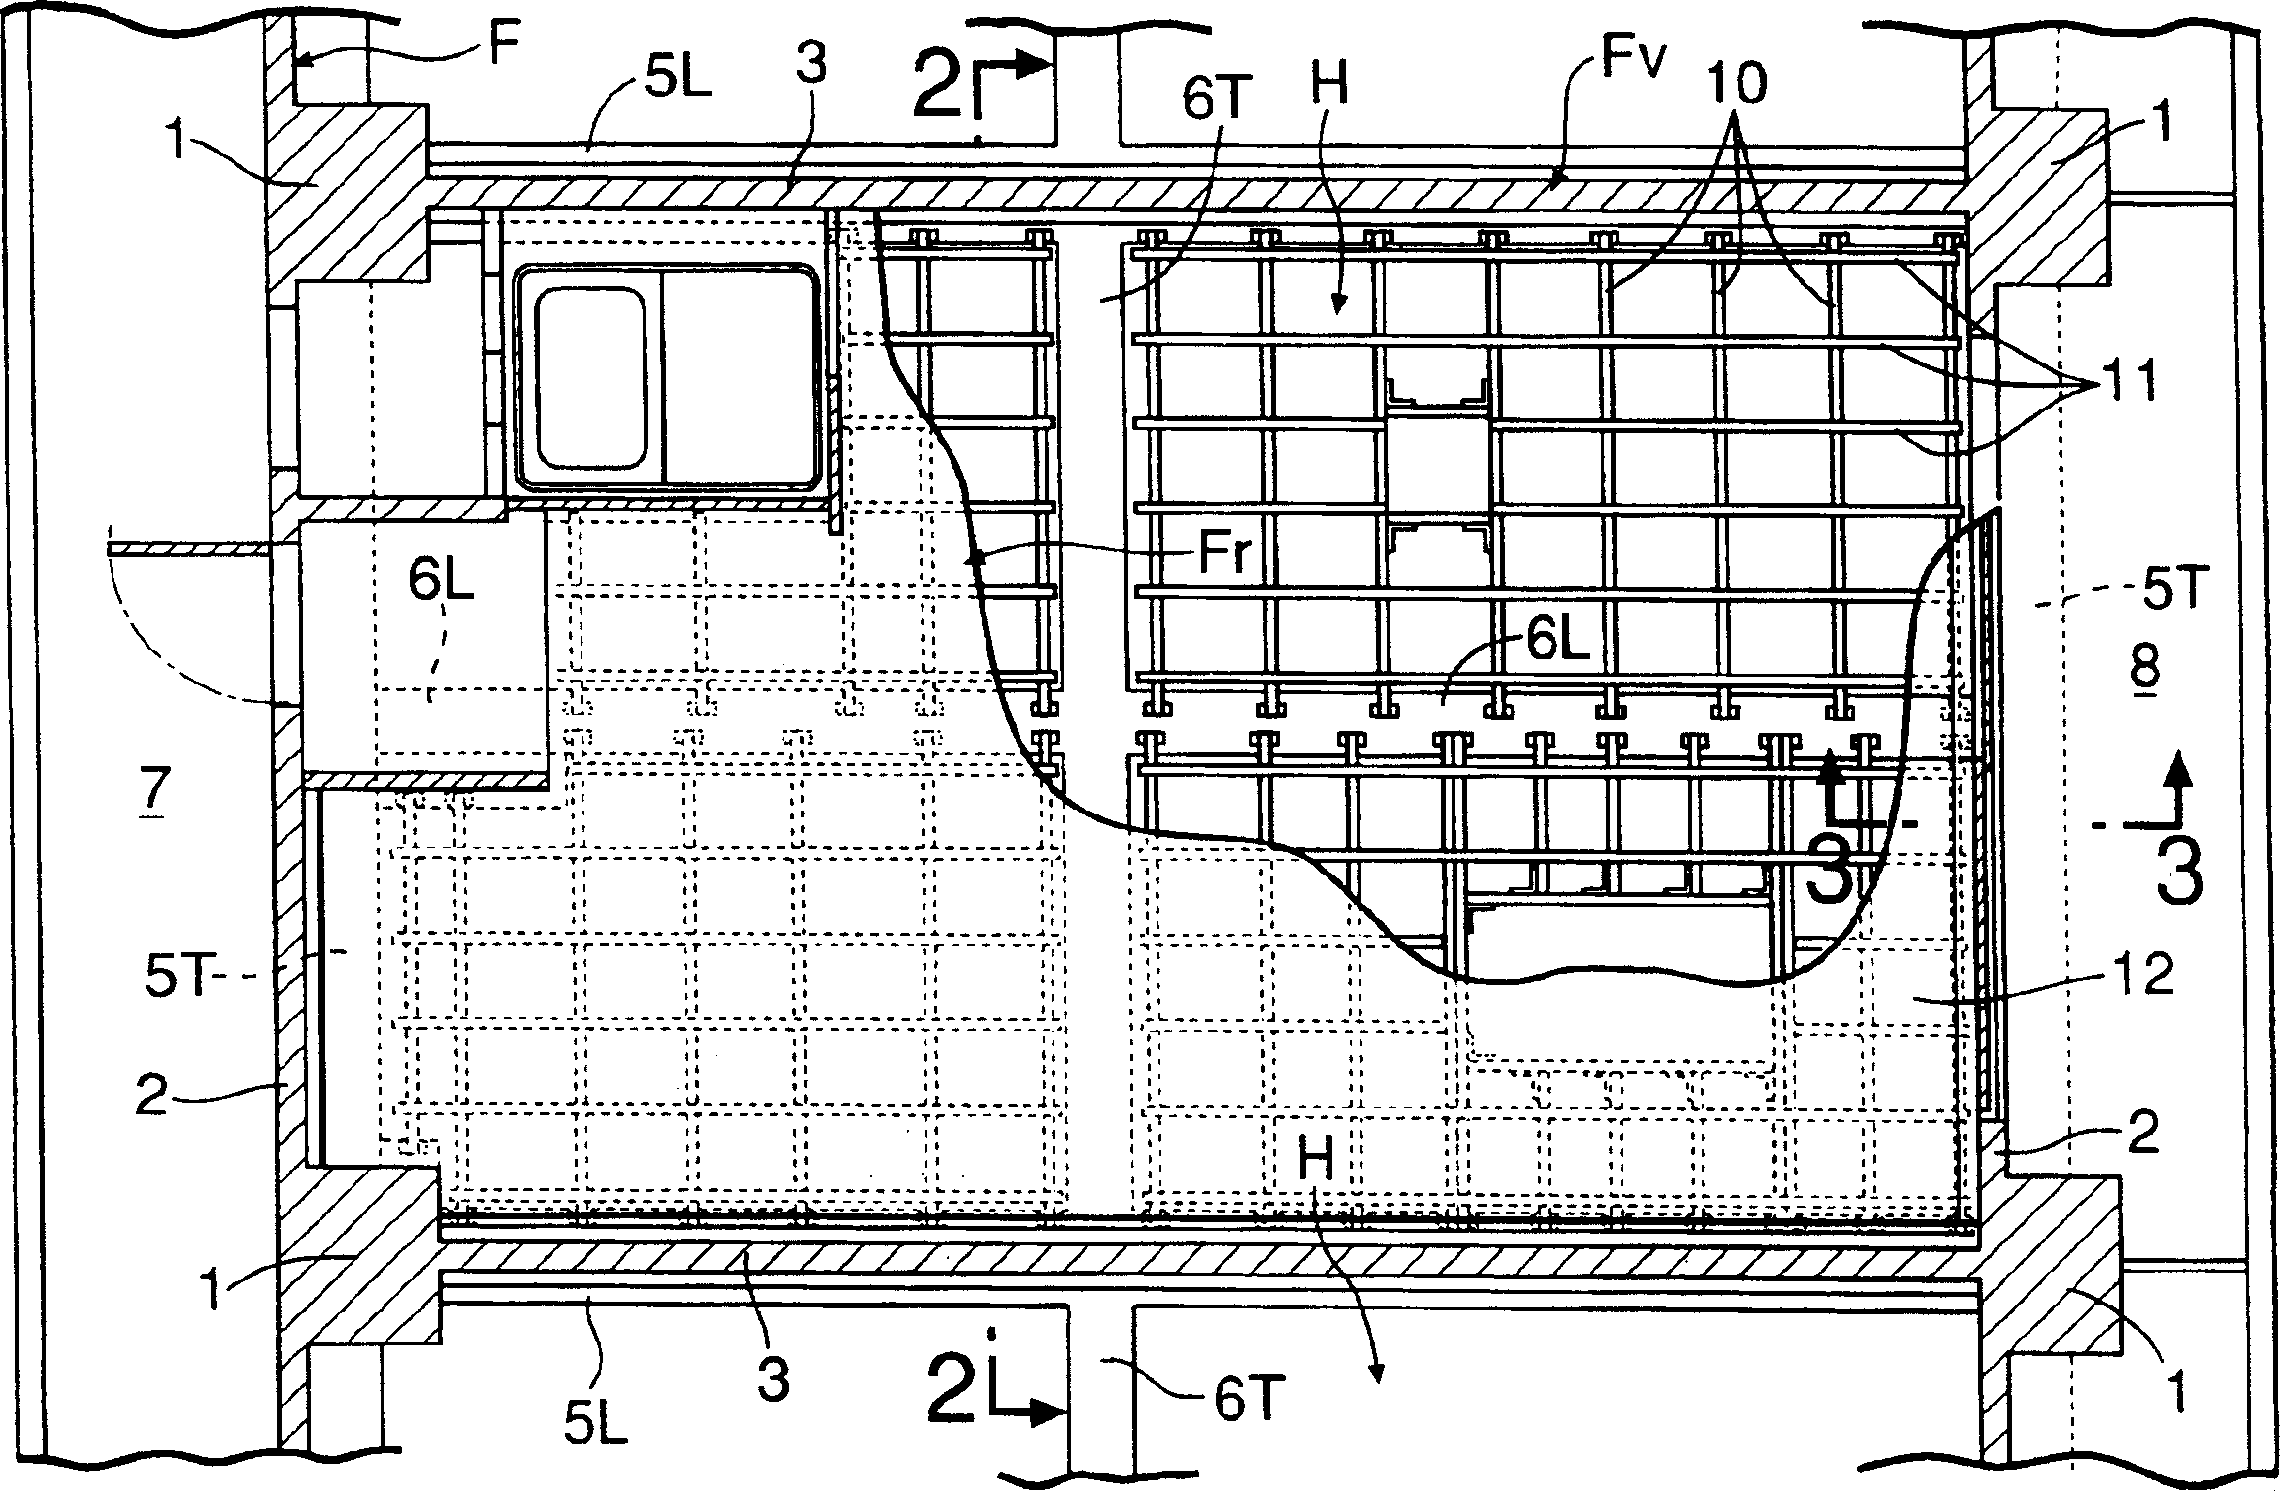 Floor support structure of building